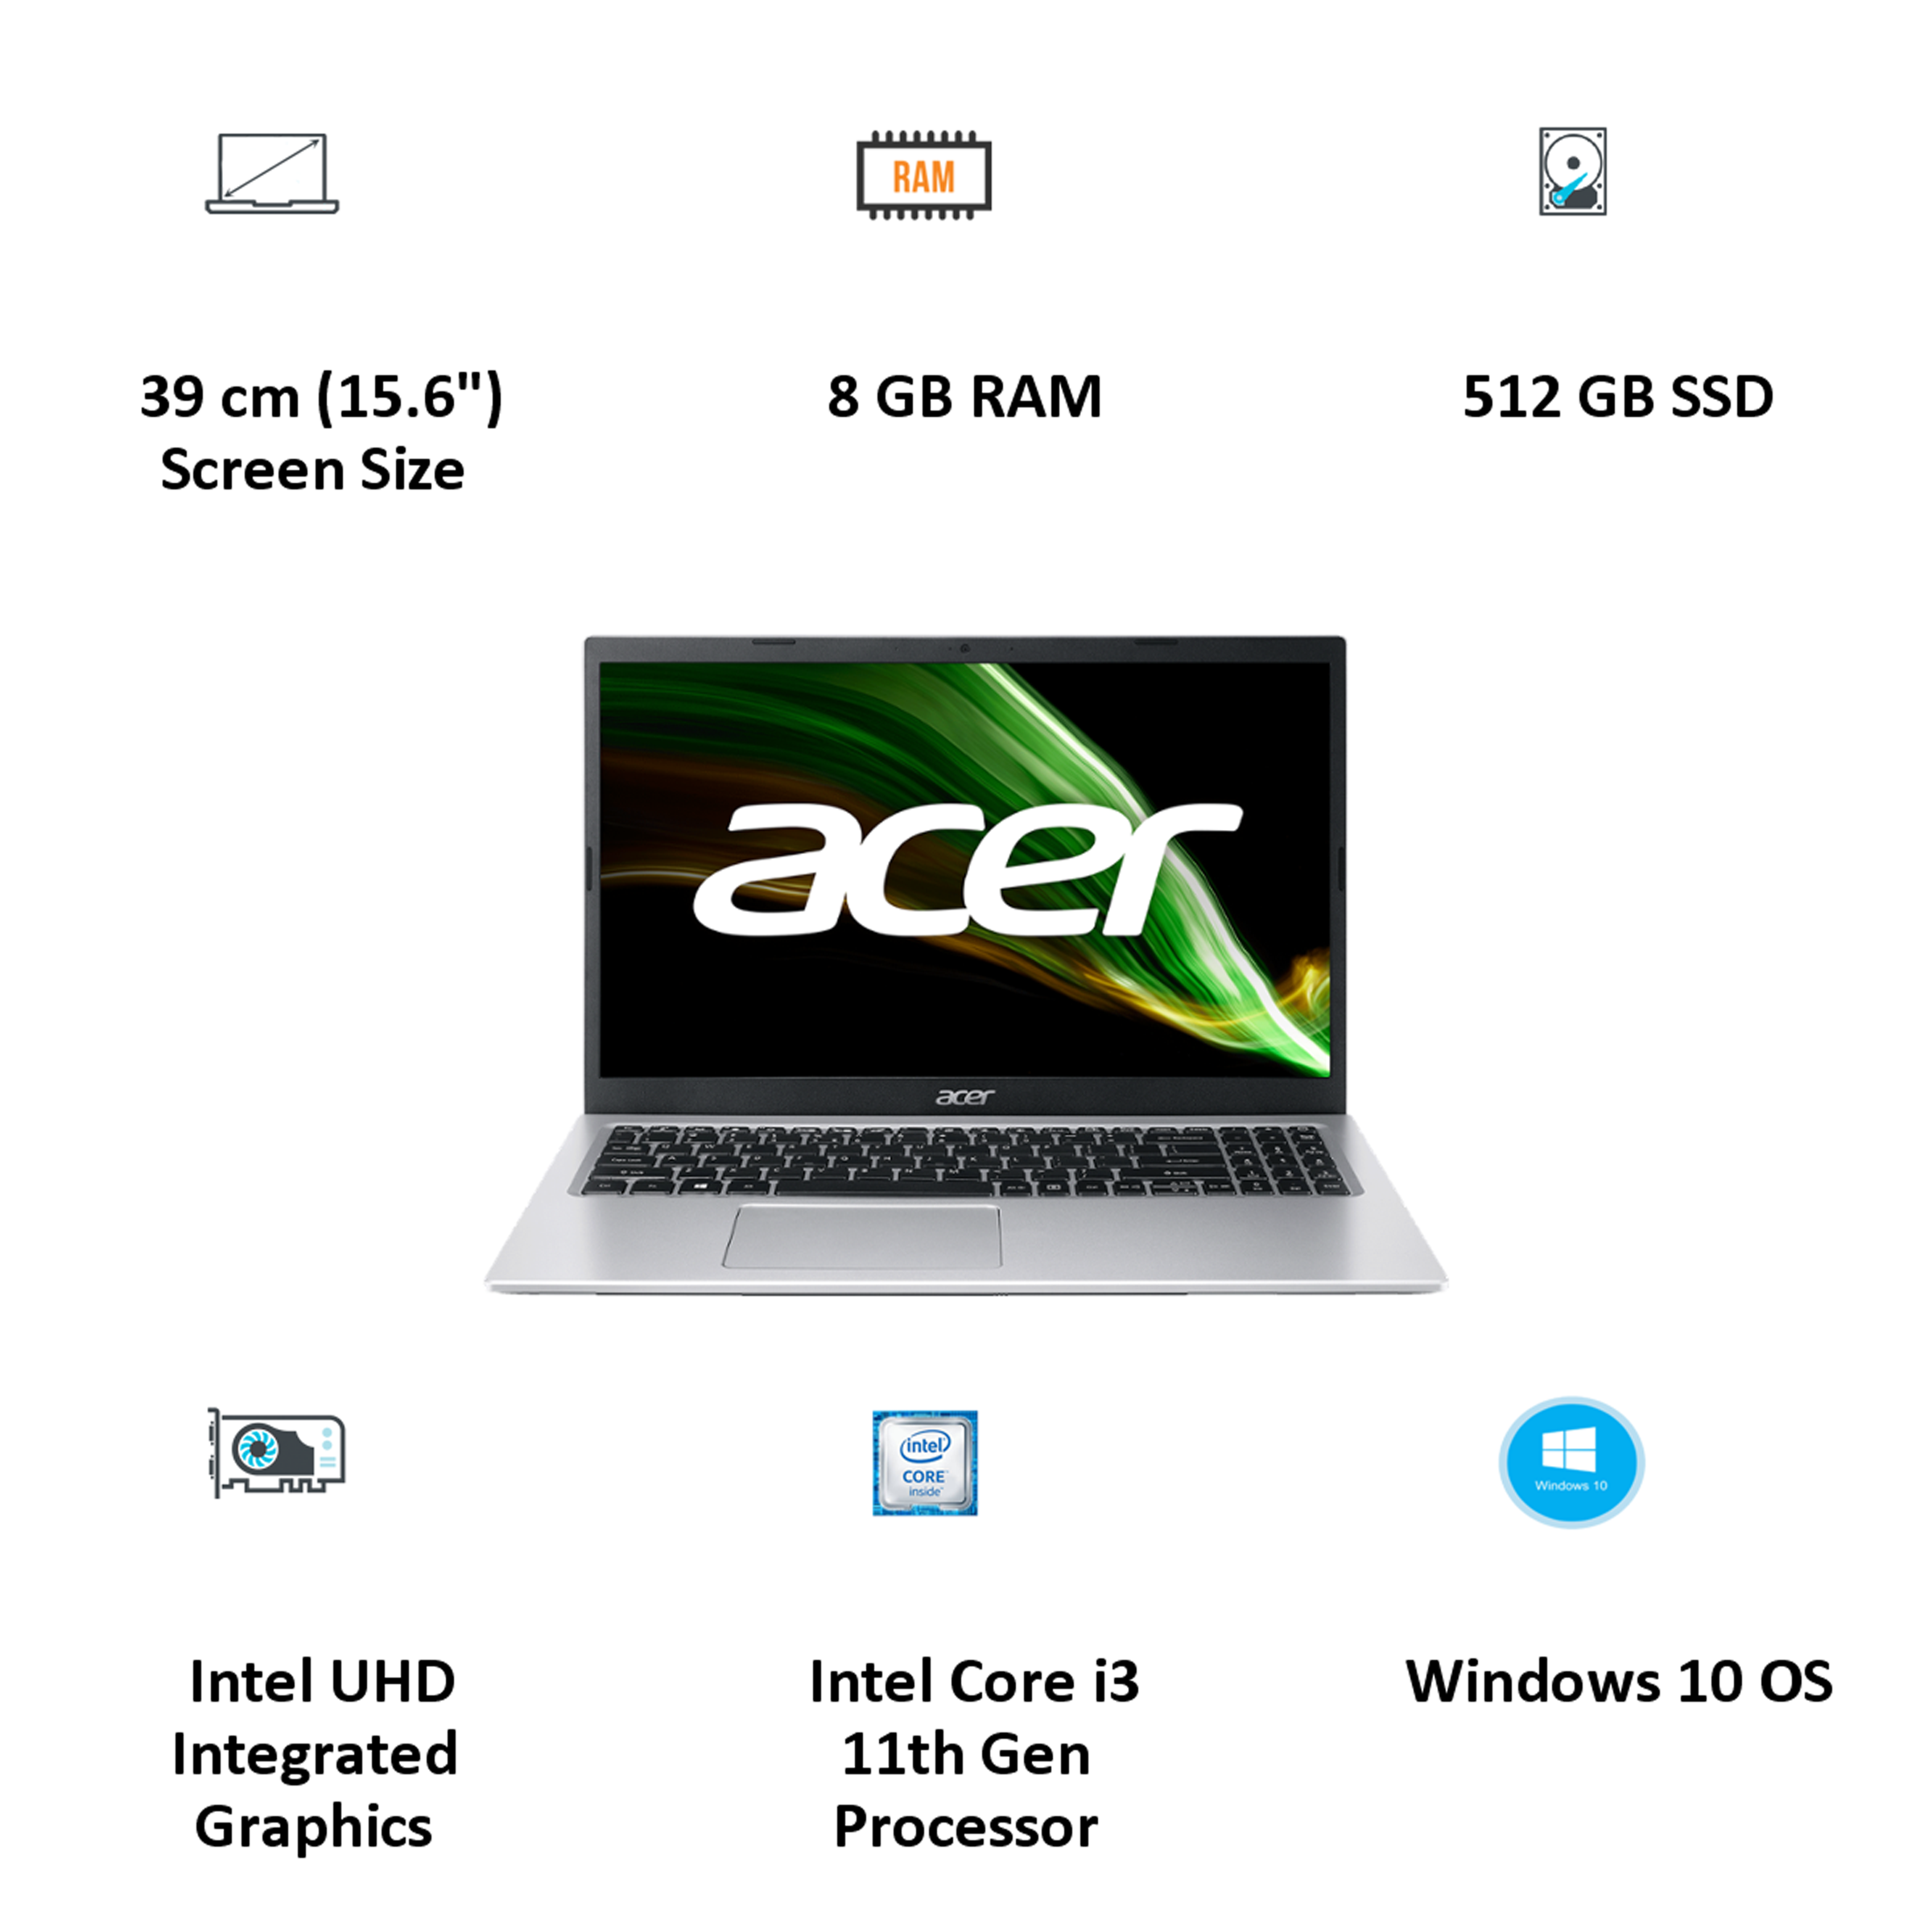 Acer A315-58 11th Gen Core i3 Windows 10 Laptop (8GB RAM, 512GB SSD, Intel UHD Graphics, MS Office, 39.62cm, UN.ADDSI.023, Silver)_4